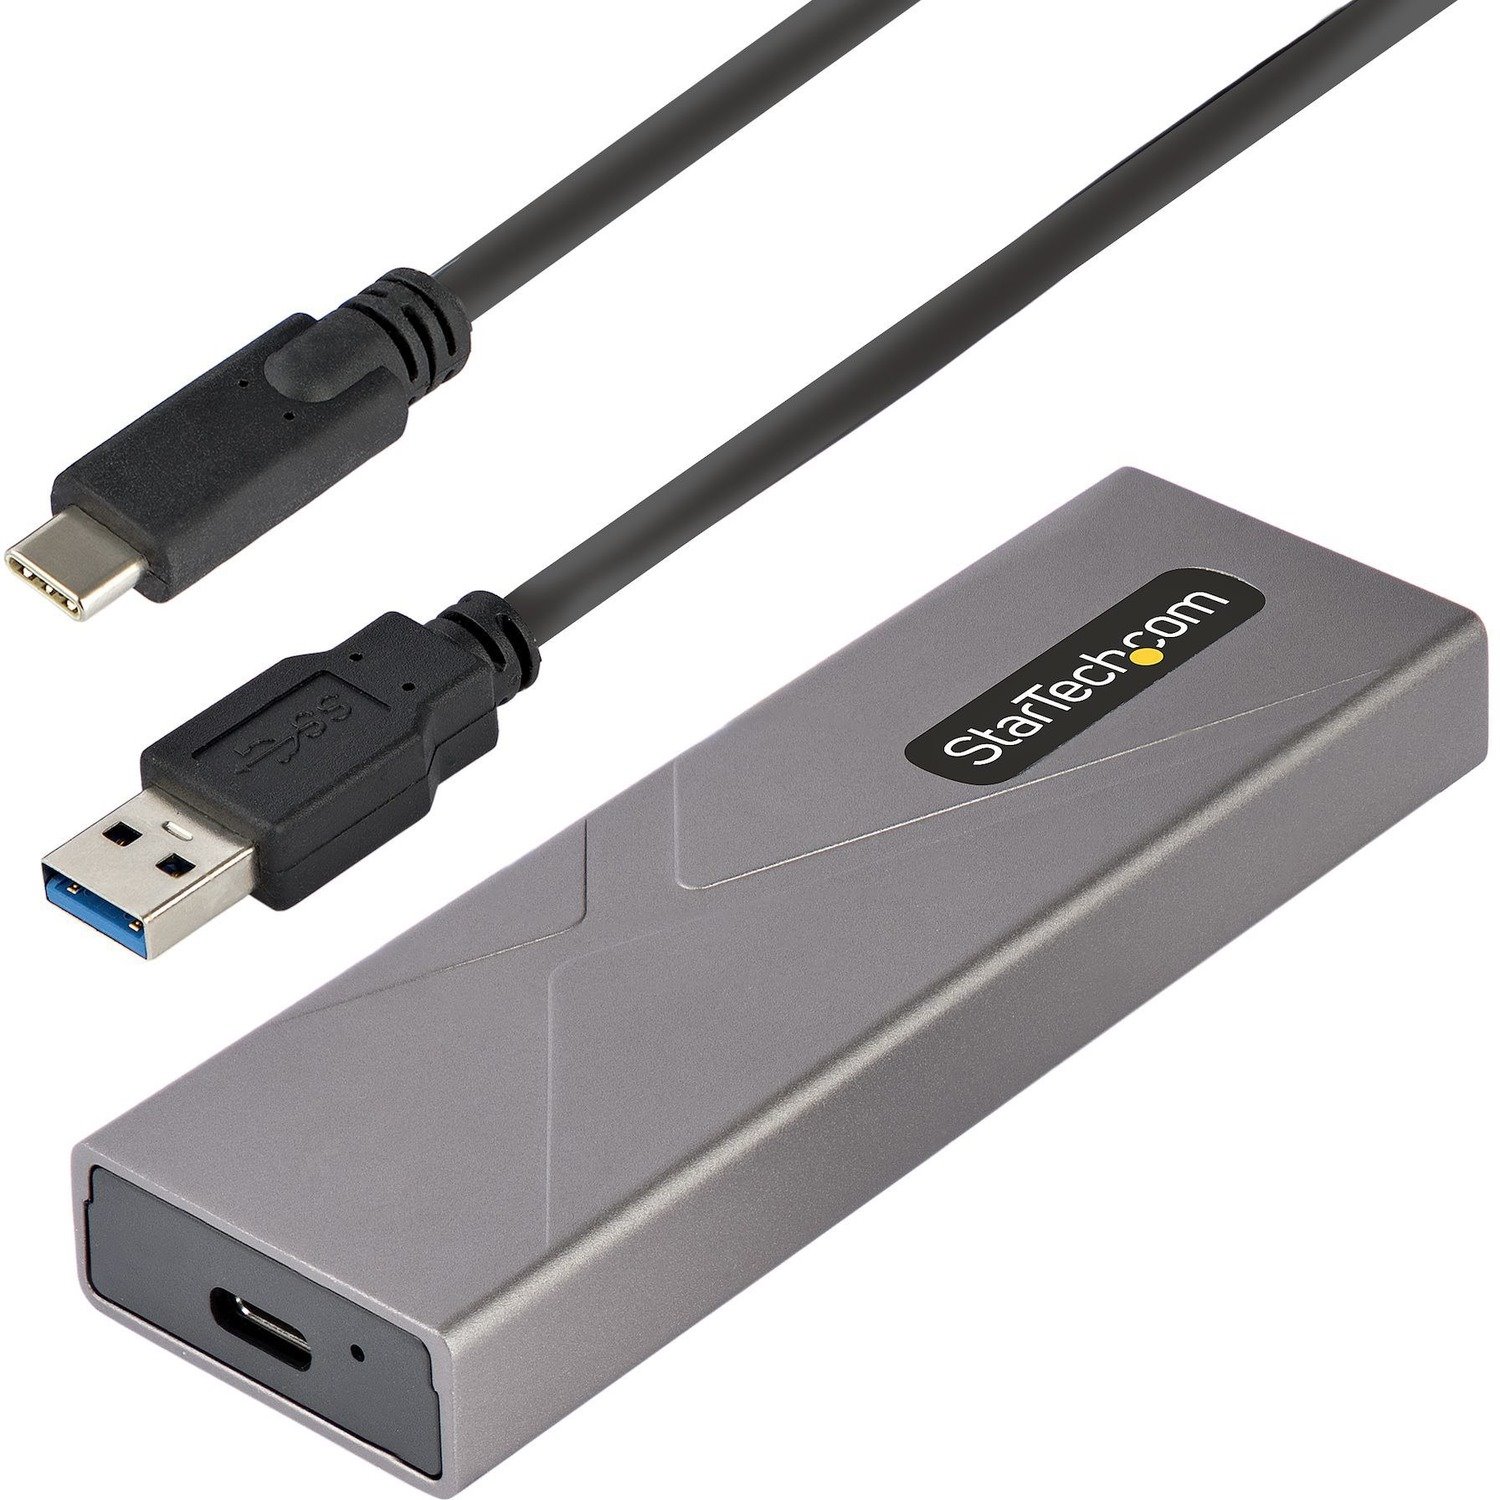 USB-C 10Gbps to M.2 NVMe or M.2 SATA SSD Enclosure, Tool-free M.2 PCIe/SATA SSD Aluminum Enclosure, USB-C & USB-A Host Cables